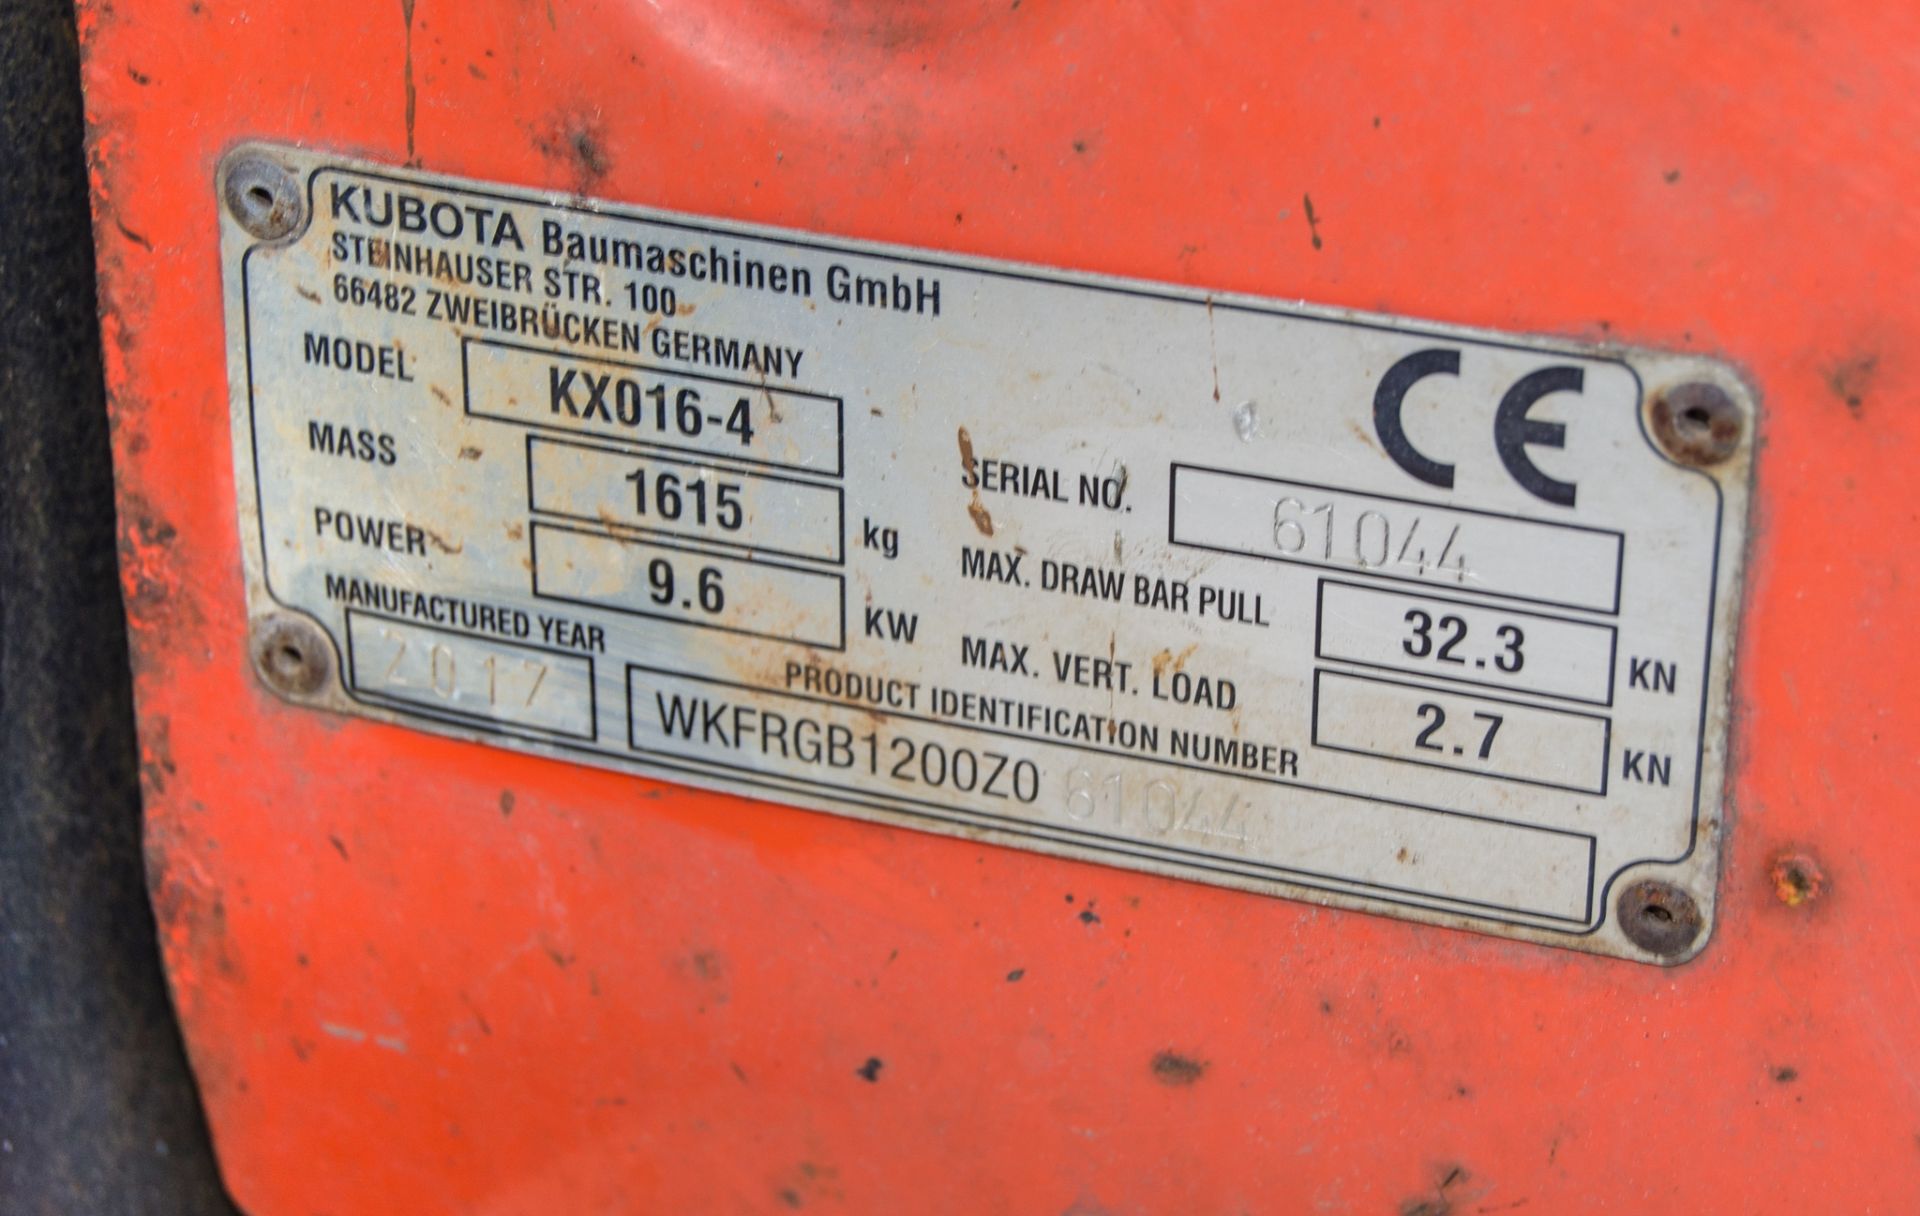 Kubota KX016-4 1.5 tonne rubber tracked excavator Year: 2017 S/N: 61044 Recorded Hours: 2260 - Bild 26 aus 26